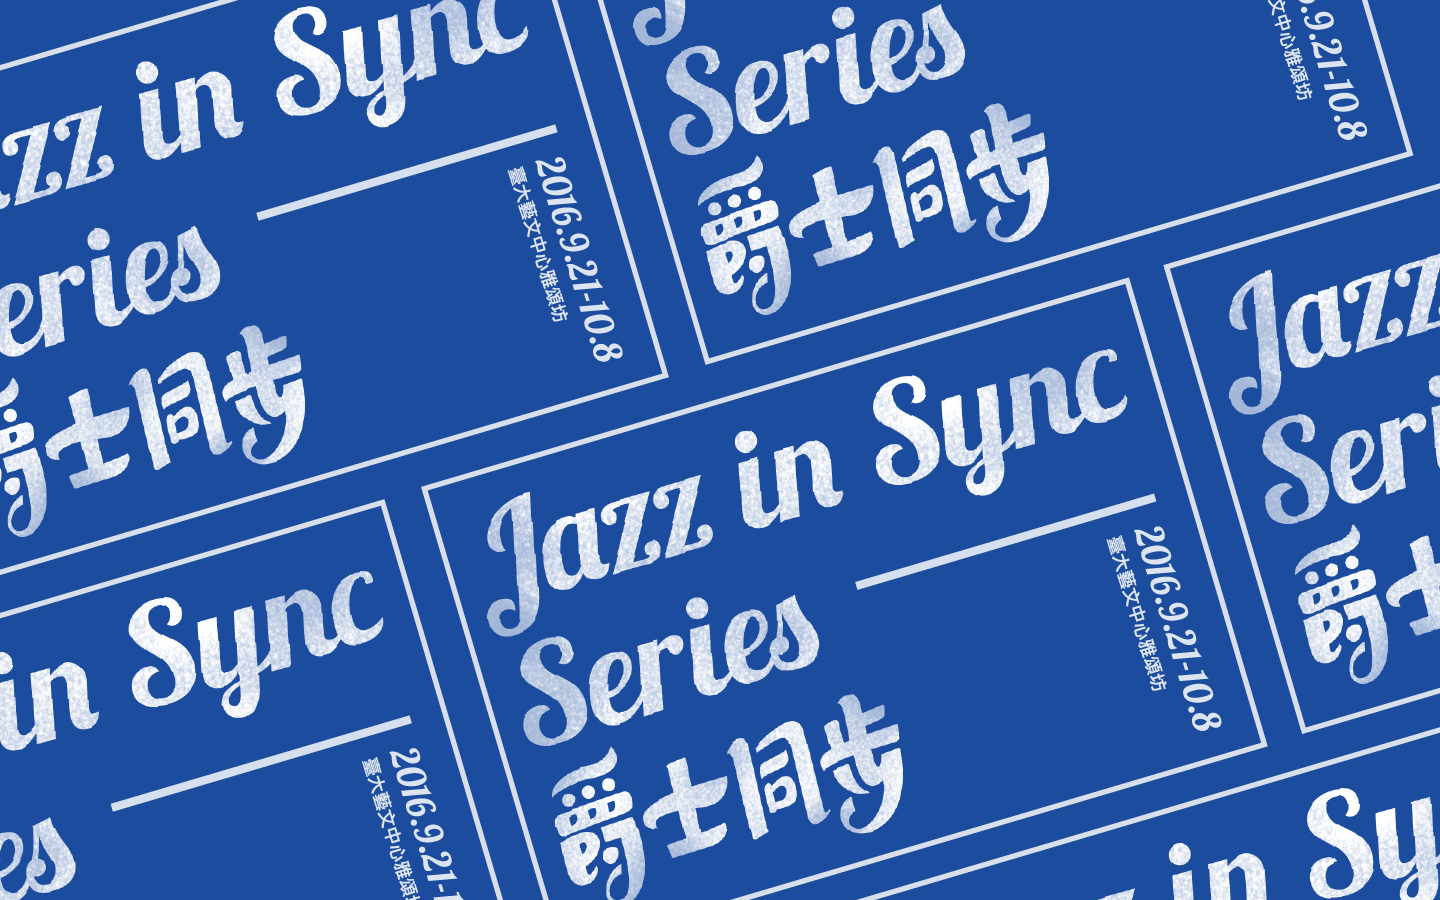 Jazz in Sync Series 爵士同步